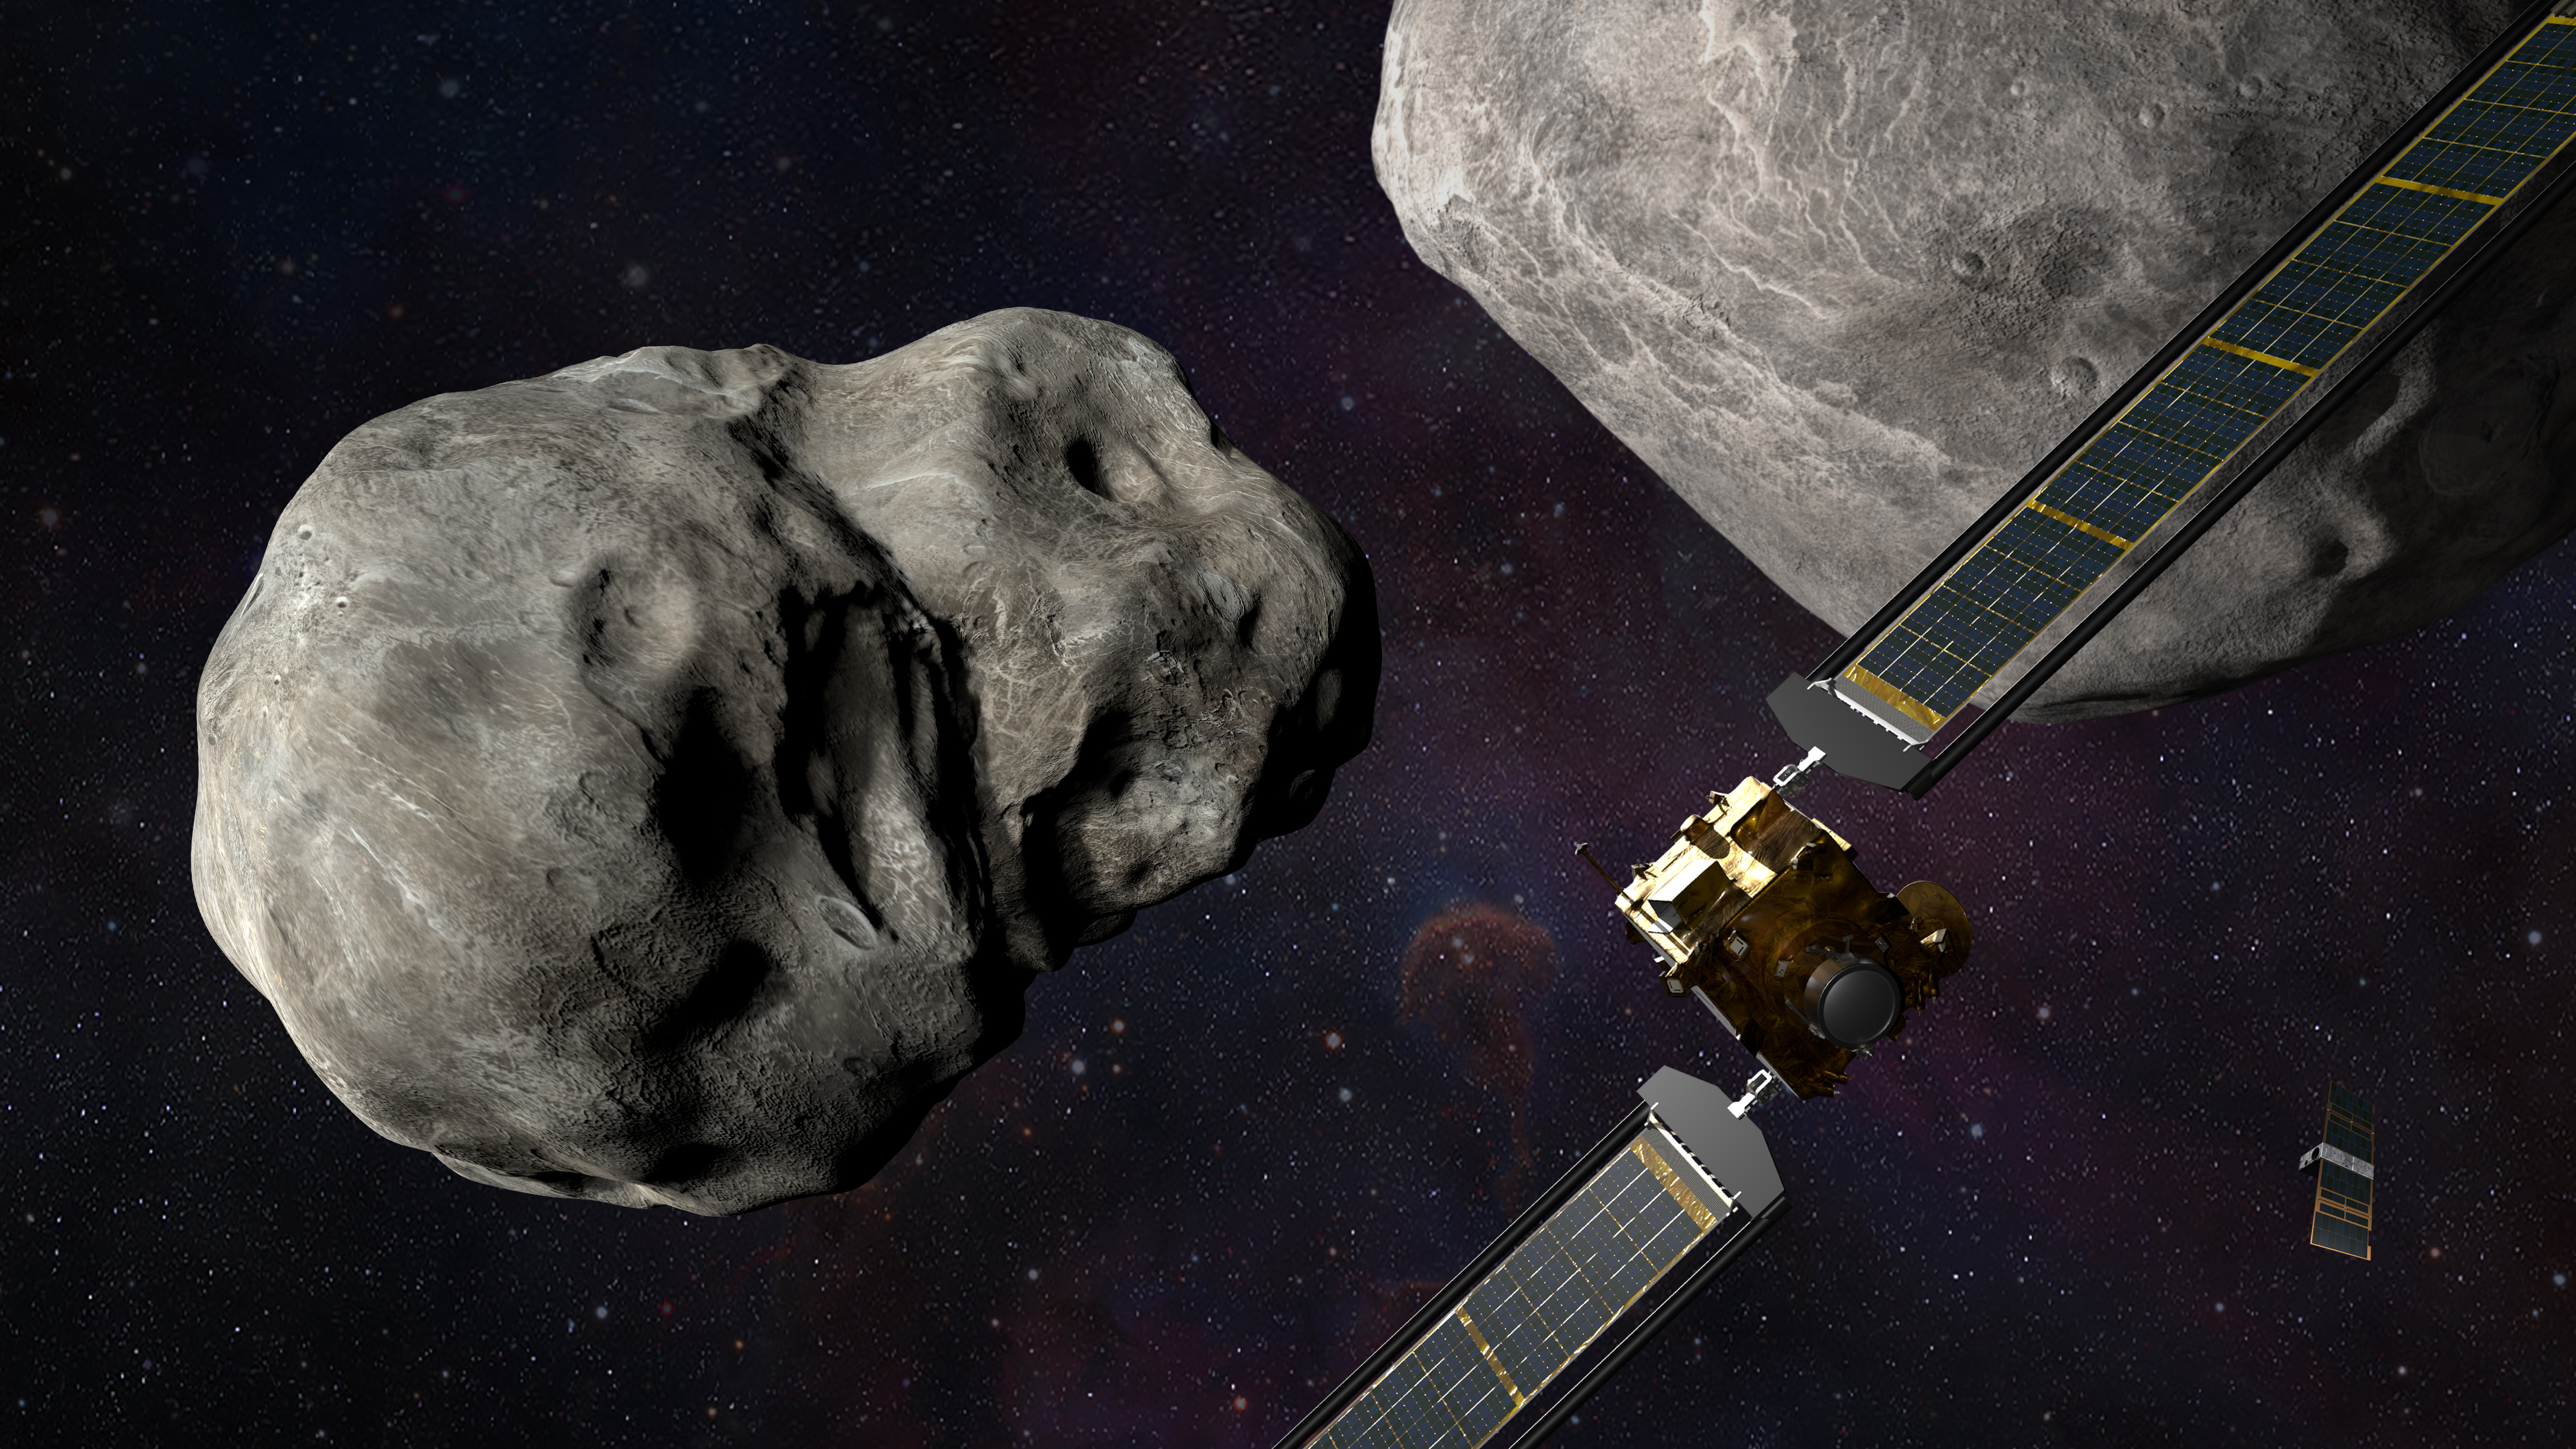 What will happen when spacecraft DART crashes into asteroid